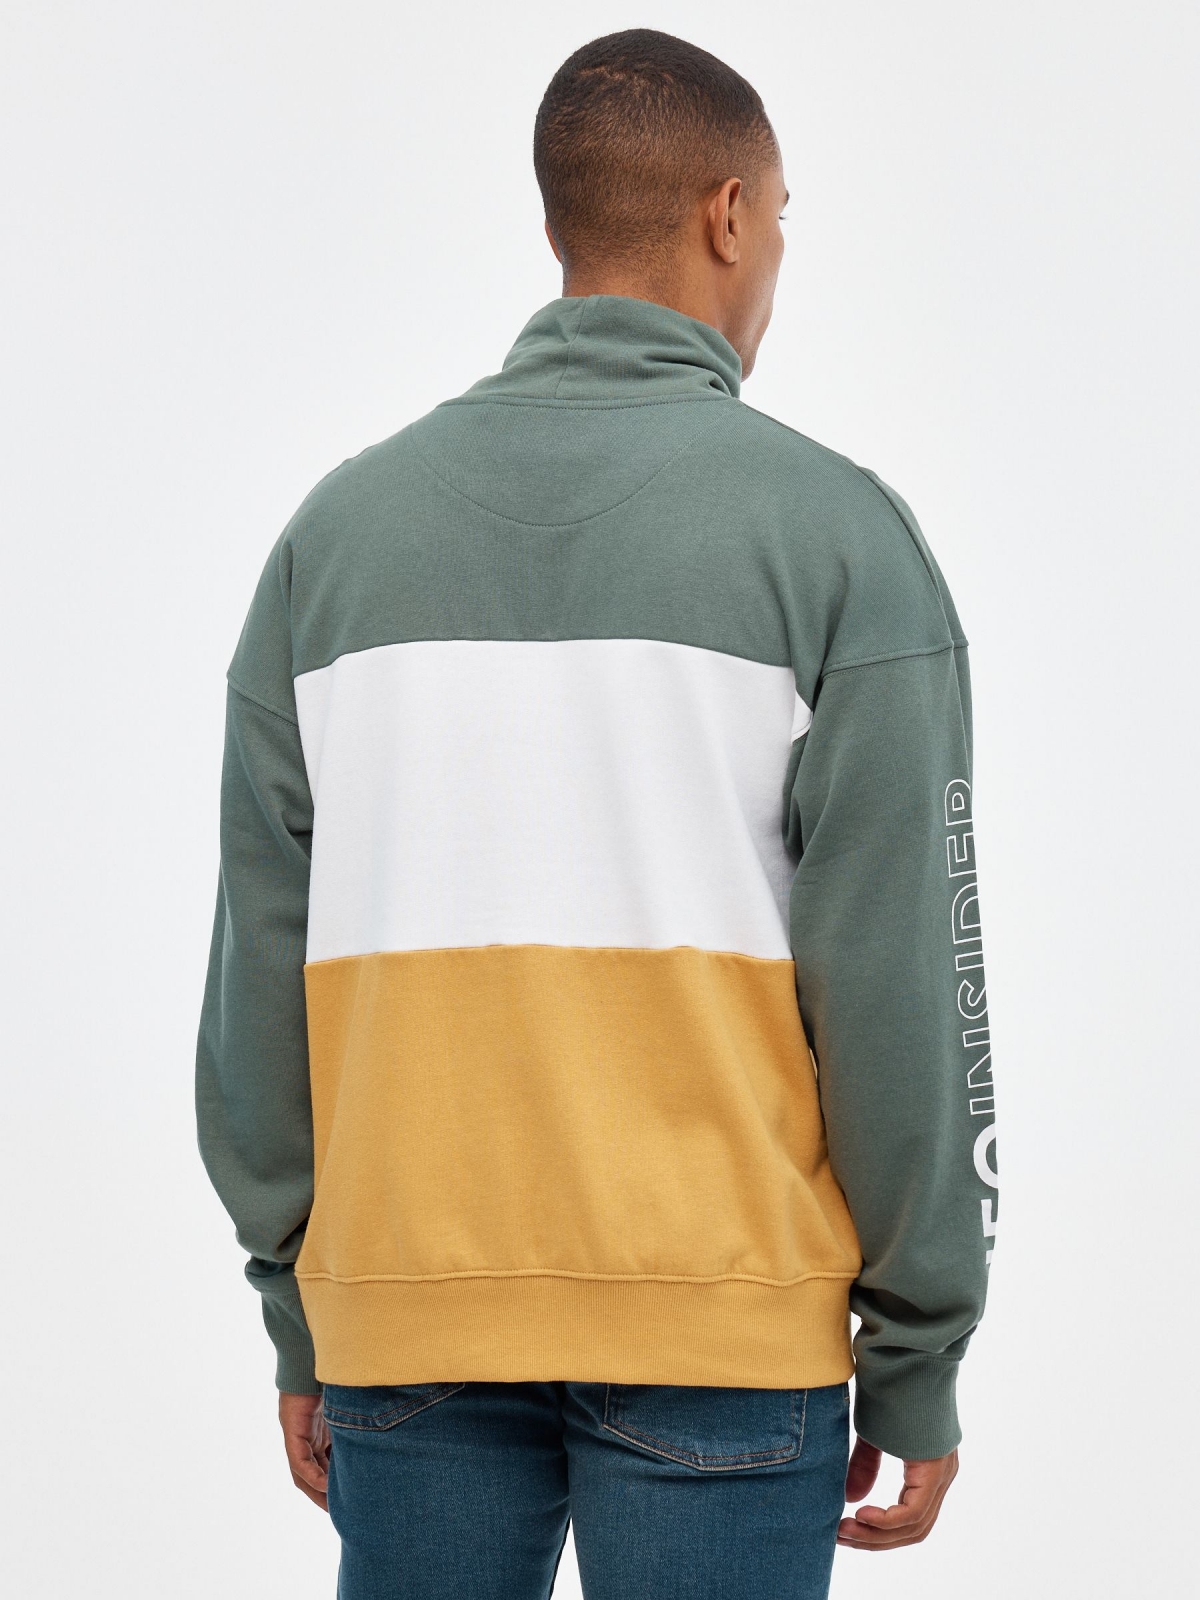 Sweatshirt NEOINSIDERS verde acinzentado vista meia traseira